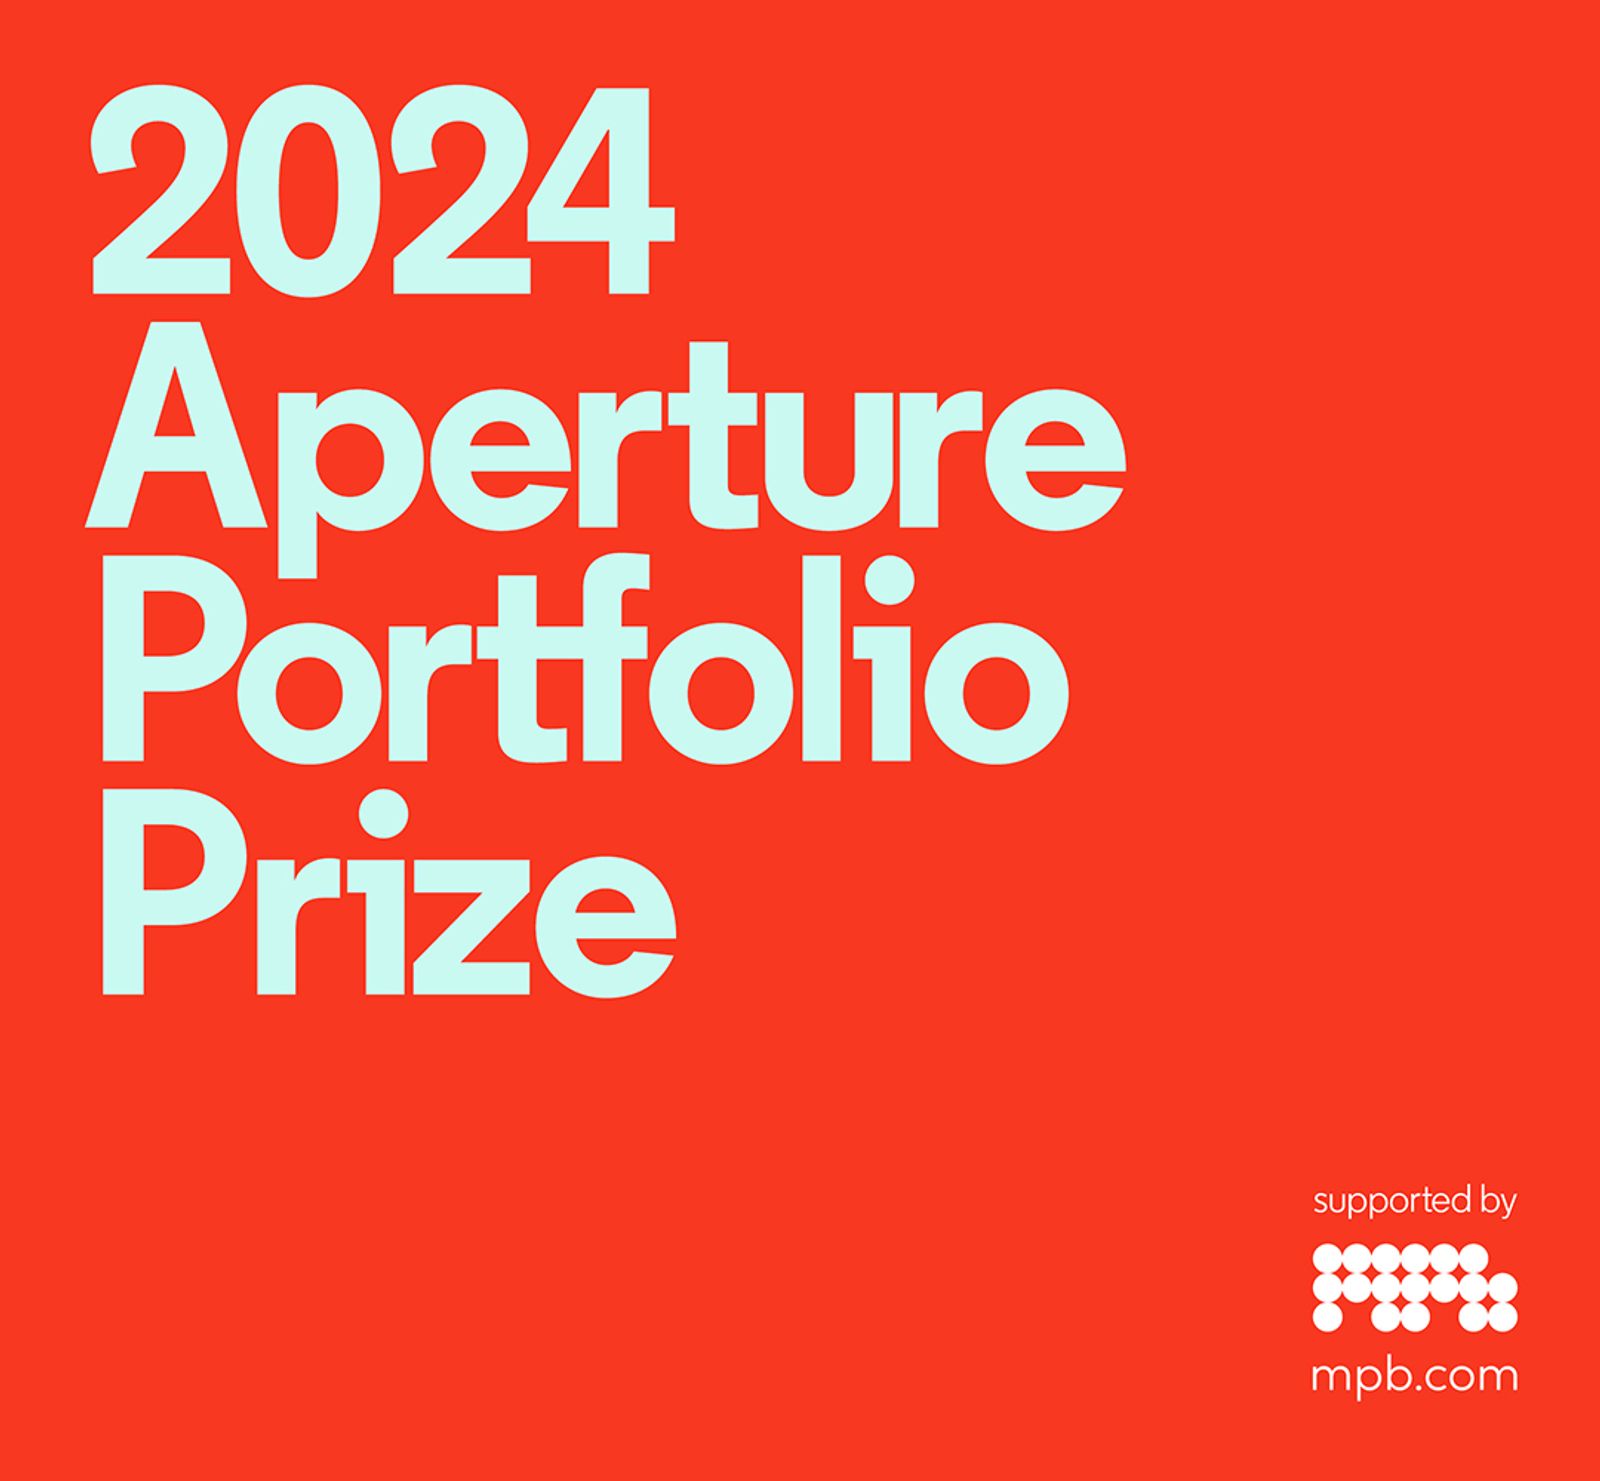 2024 Aperture Portfolio Prize